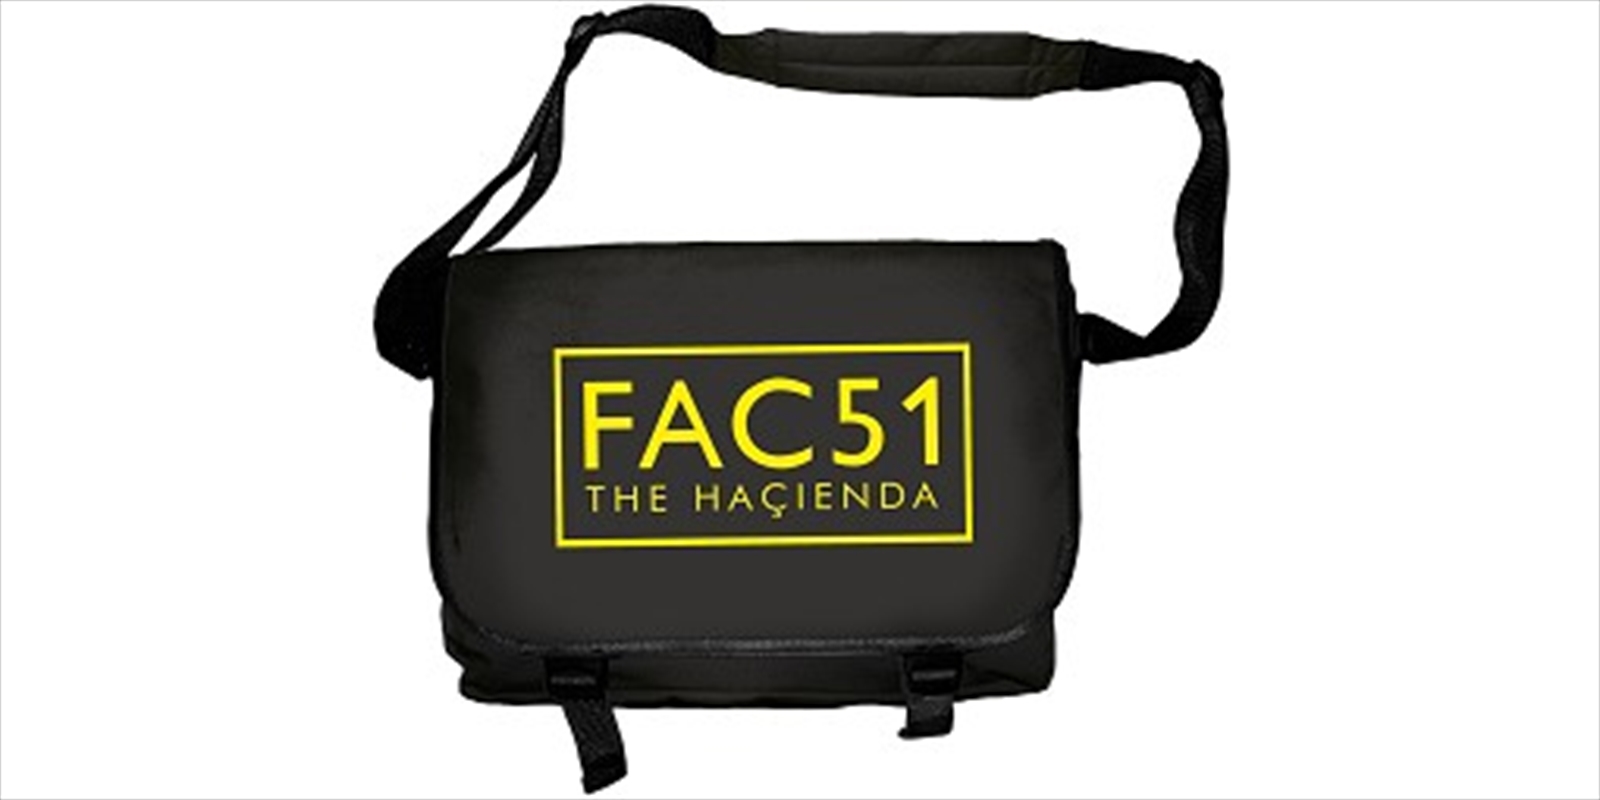 The Hacienda Fac 51 Messenger Bag/Product Detail/Bags